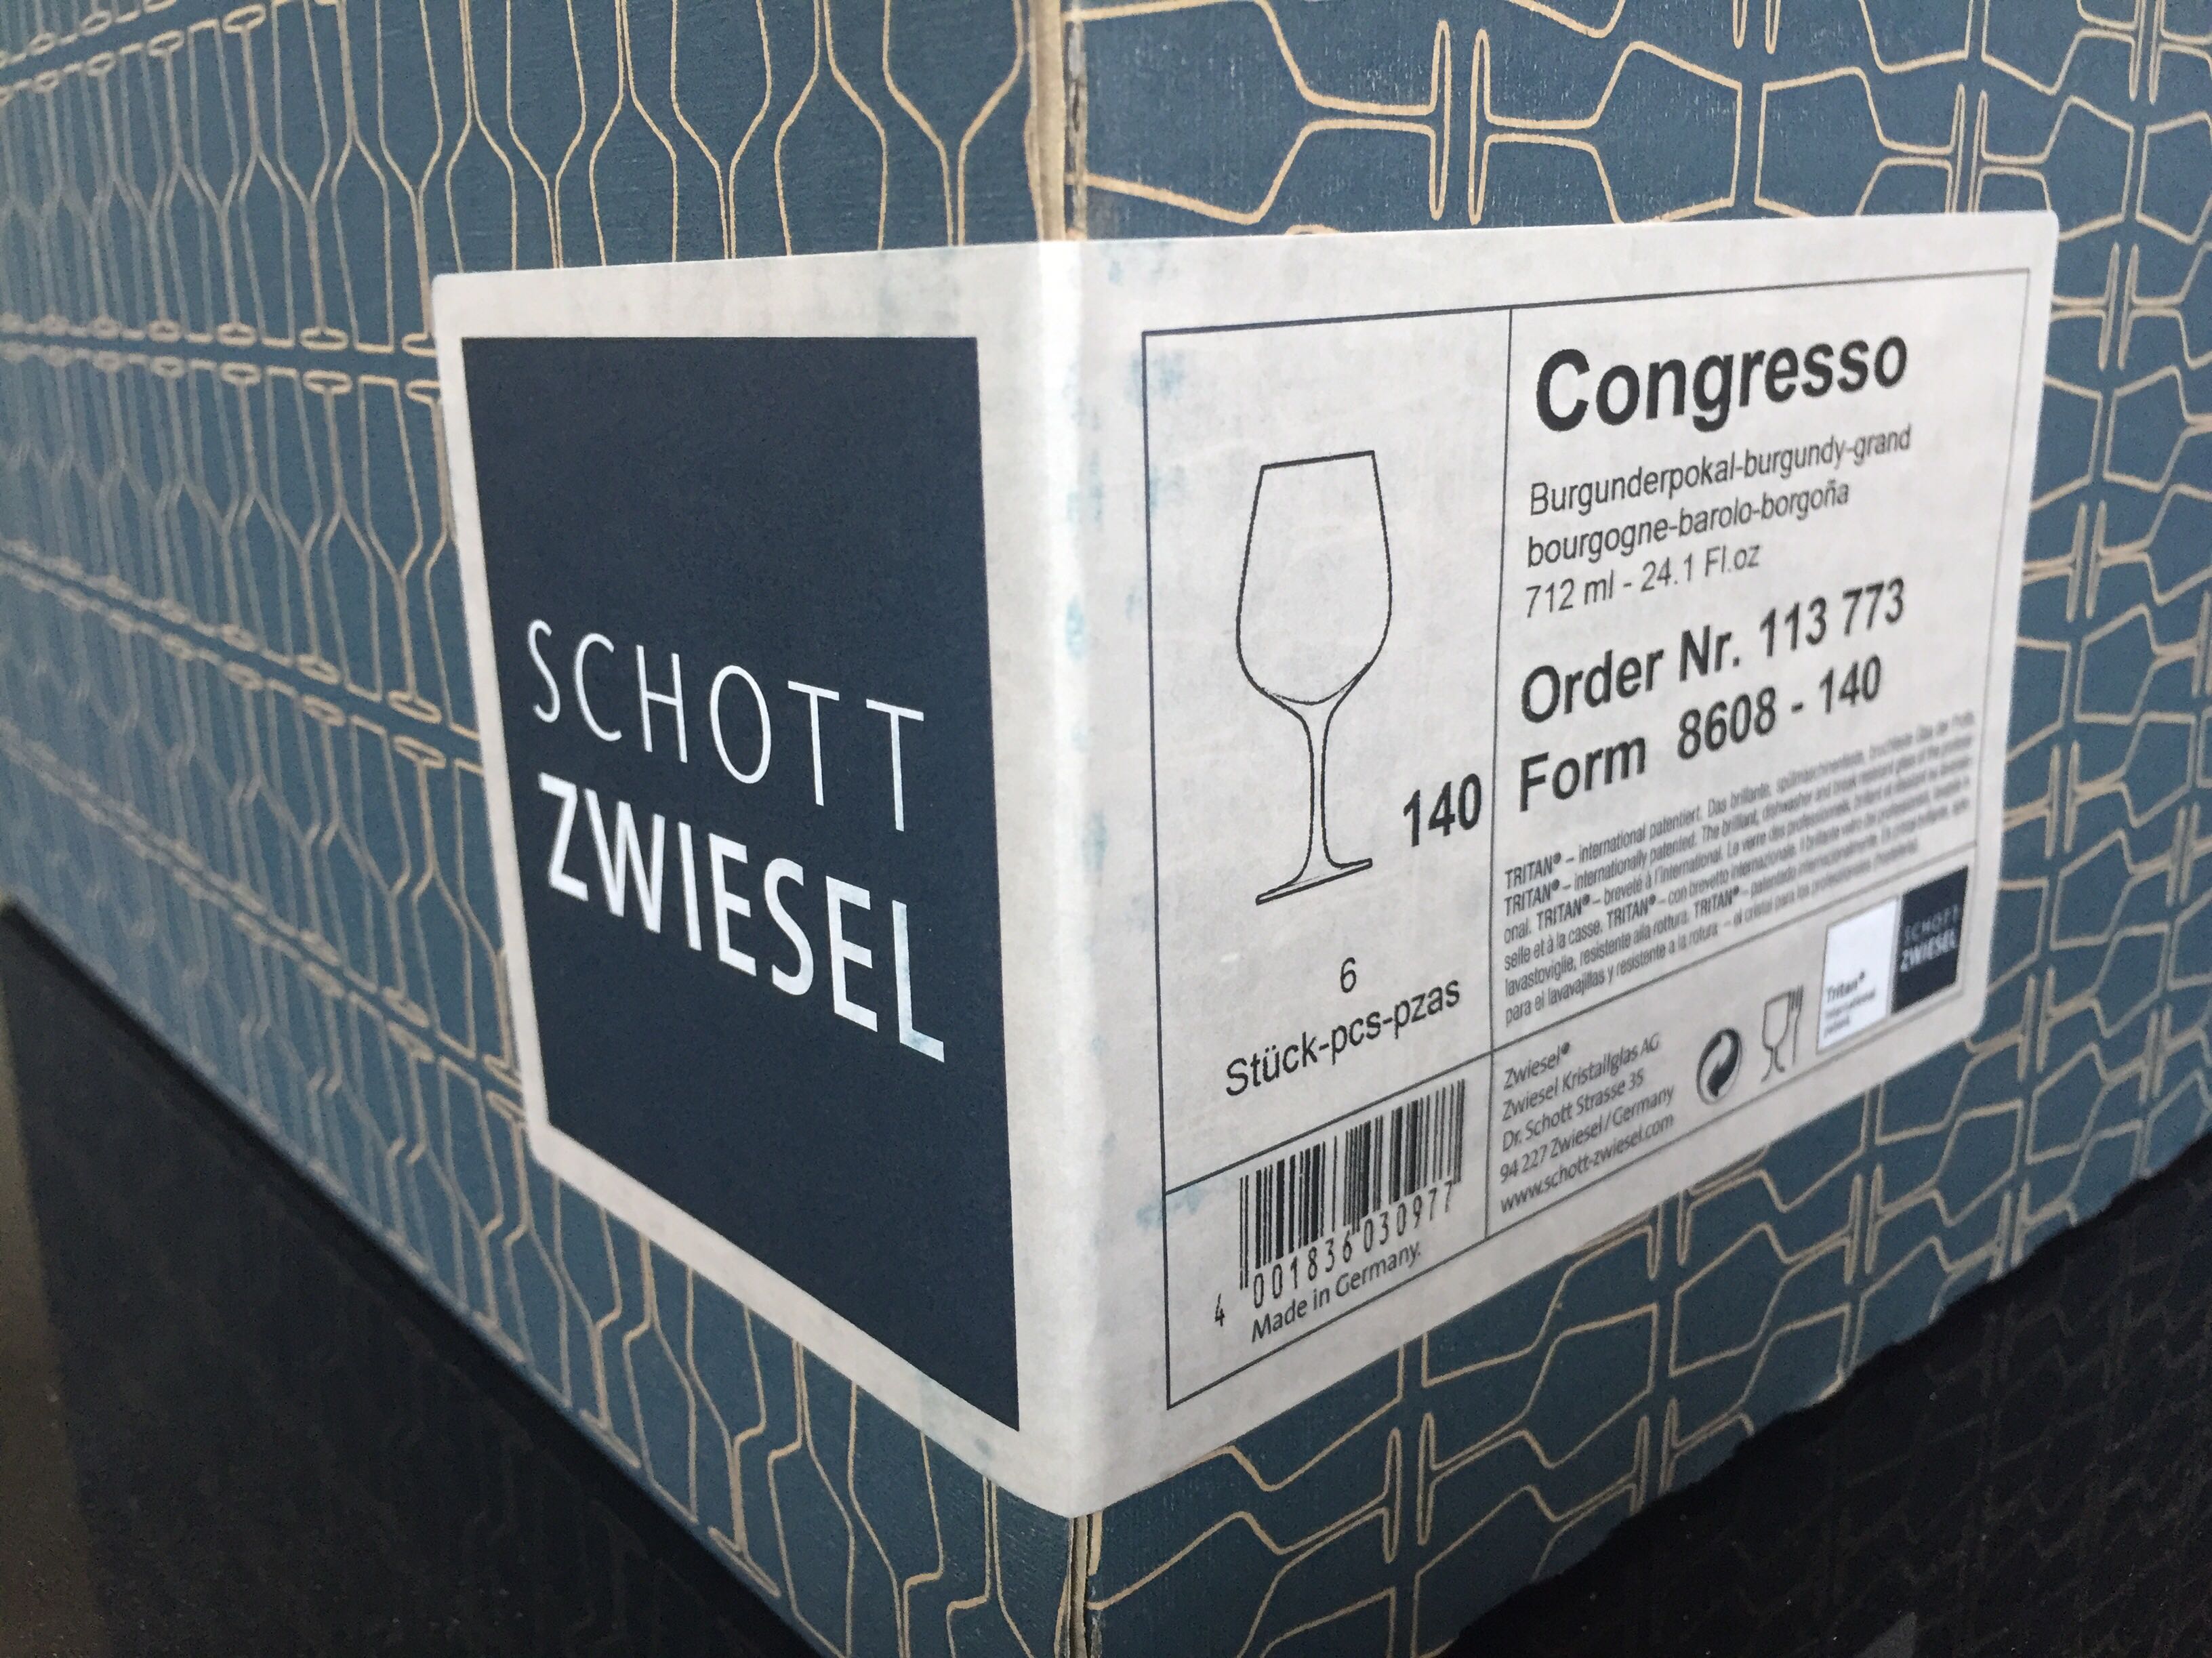 https://media.karousell.com/media/photos/products/2018/12/18/schott_zwiesel_congresso_burgundy_red_wine_glasses_box_of_6_1545128701_f6c5c281.jpg